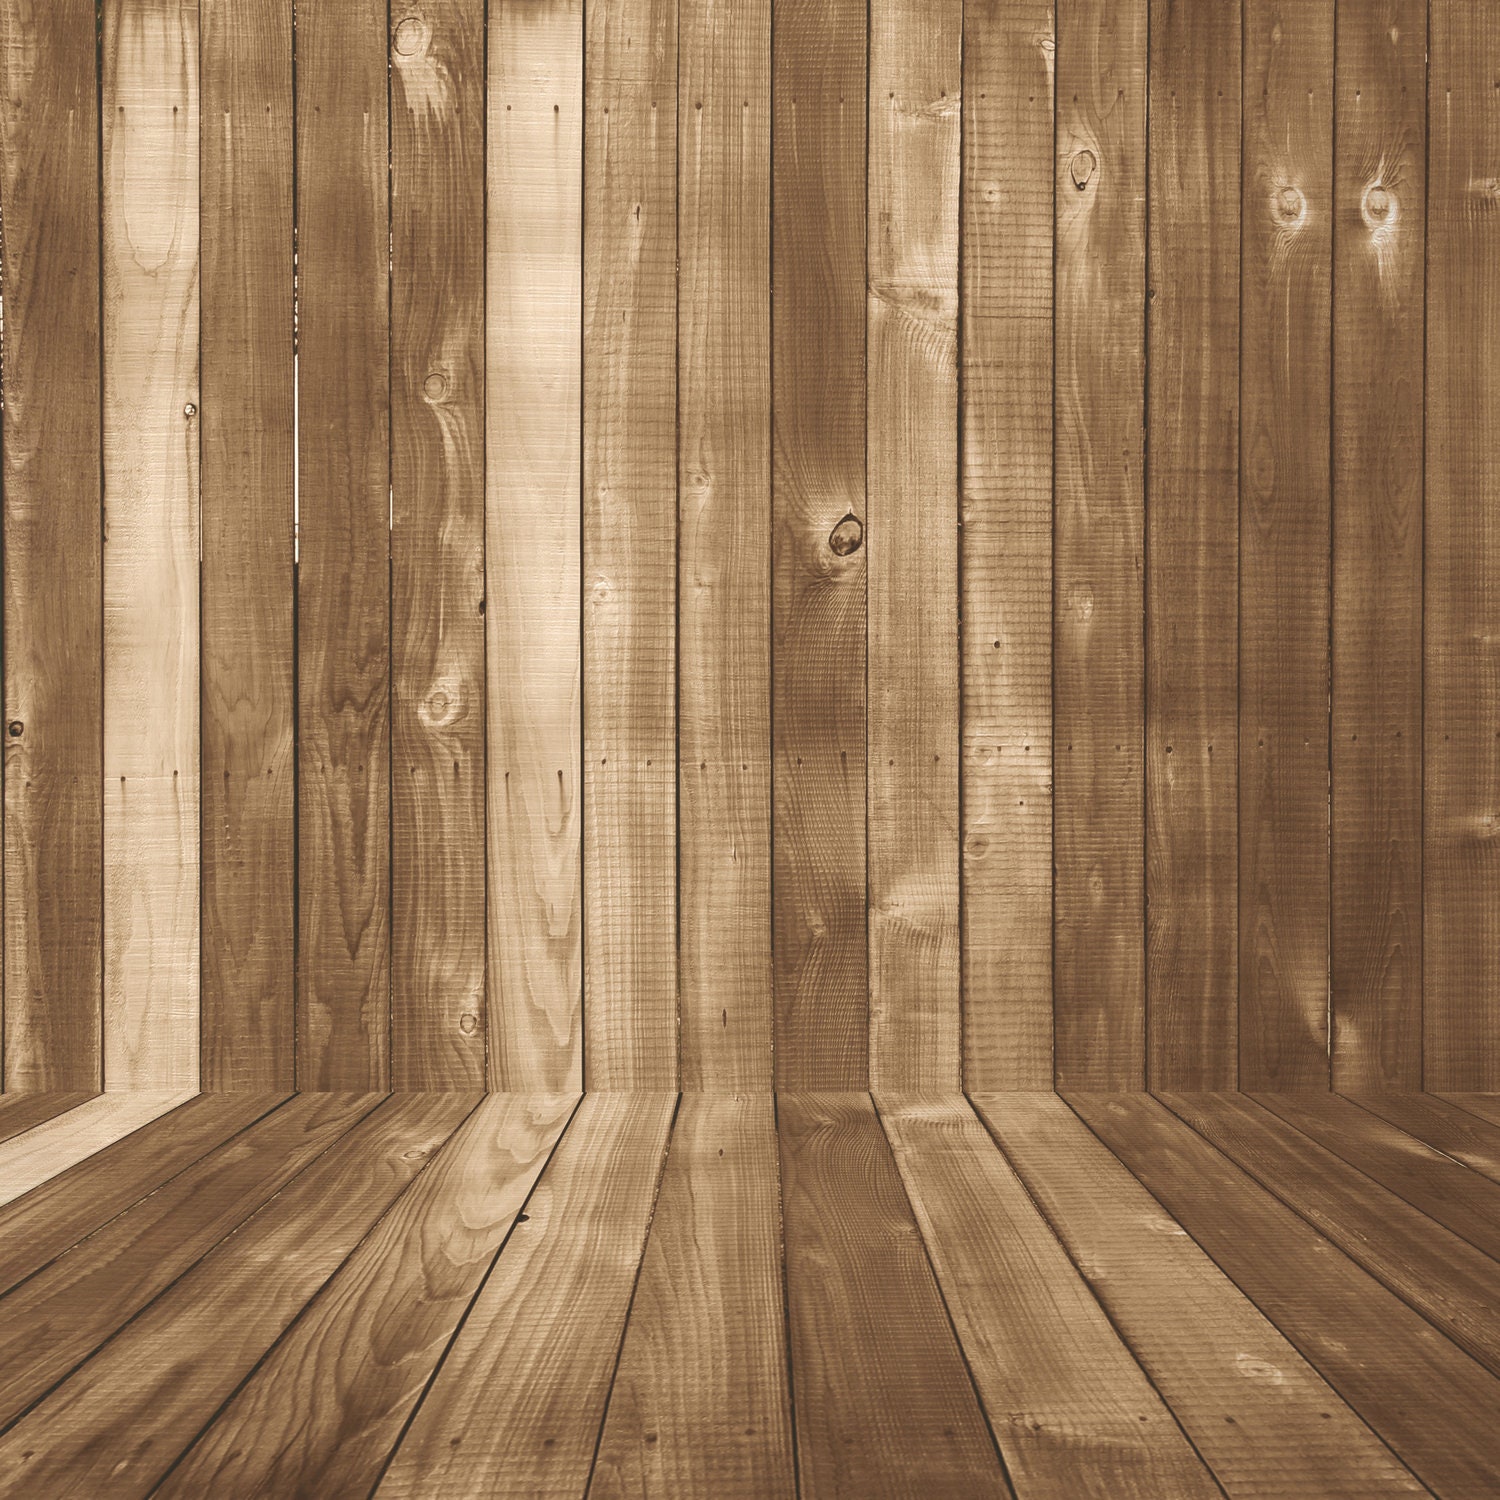 Fake Wood Floor Photography Backdrop, Vinyl Wood Look Backdrop, Rustic Wood  Photo Background, Panel Wood Wall Backdrop, Wood Plank WDF182